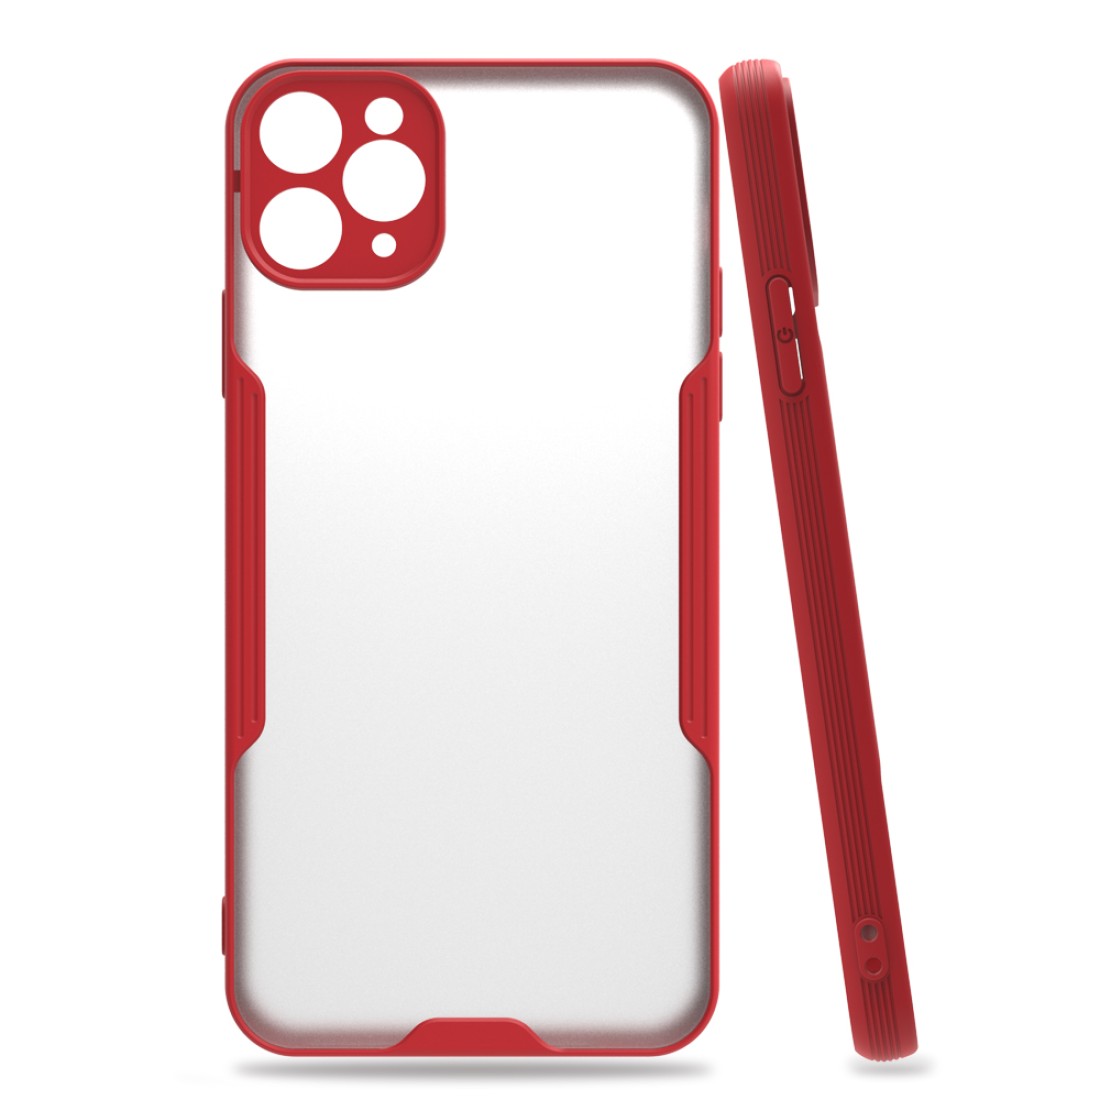 Apple iPhone 11 Pro Max Kılıf Platin Silikon - Kırmızı